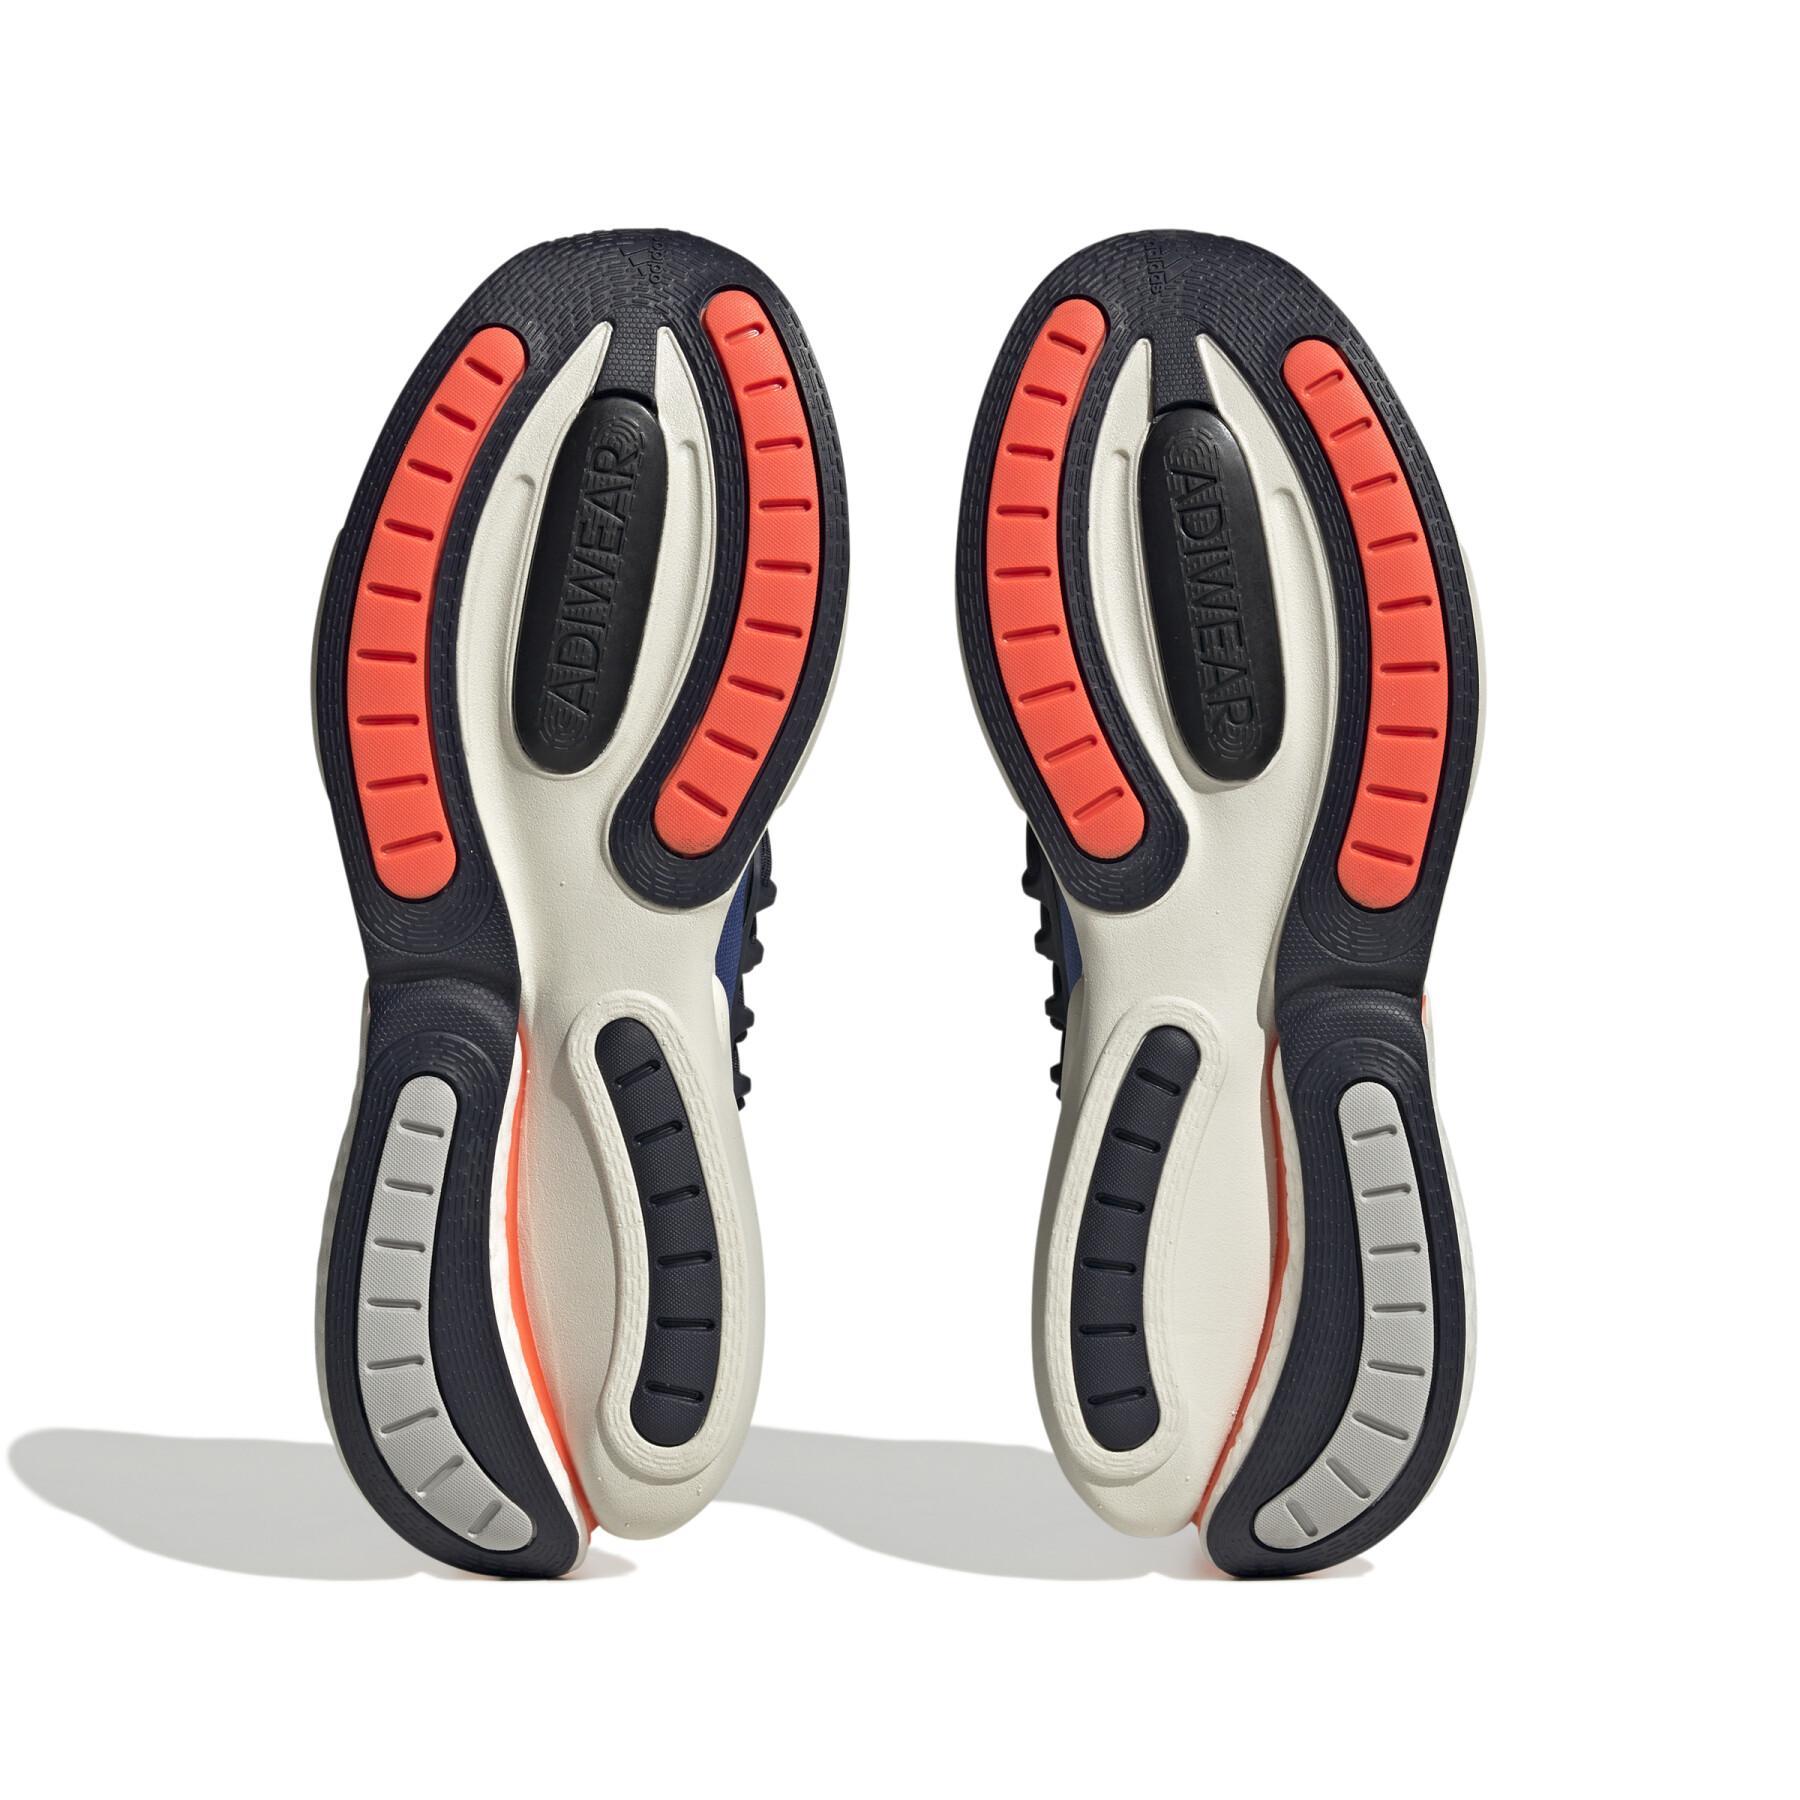 Running shoes adidas Alphaboost V1